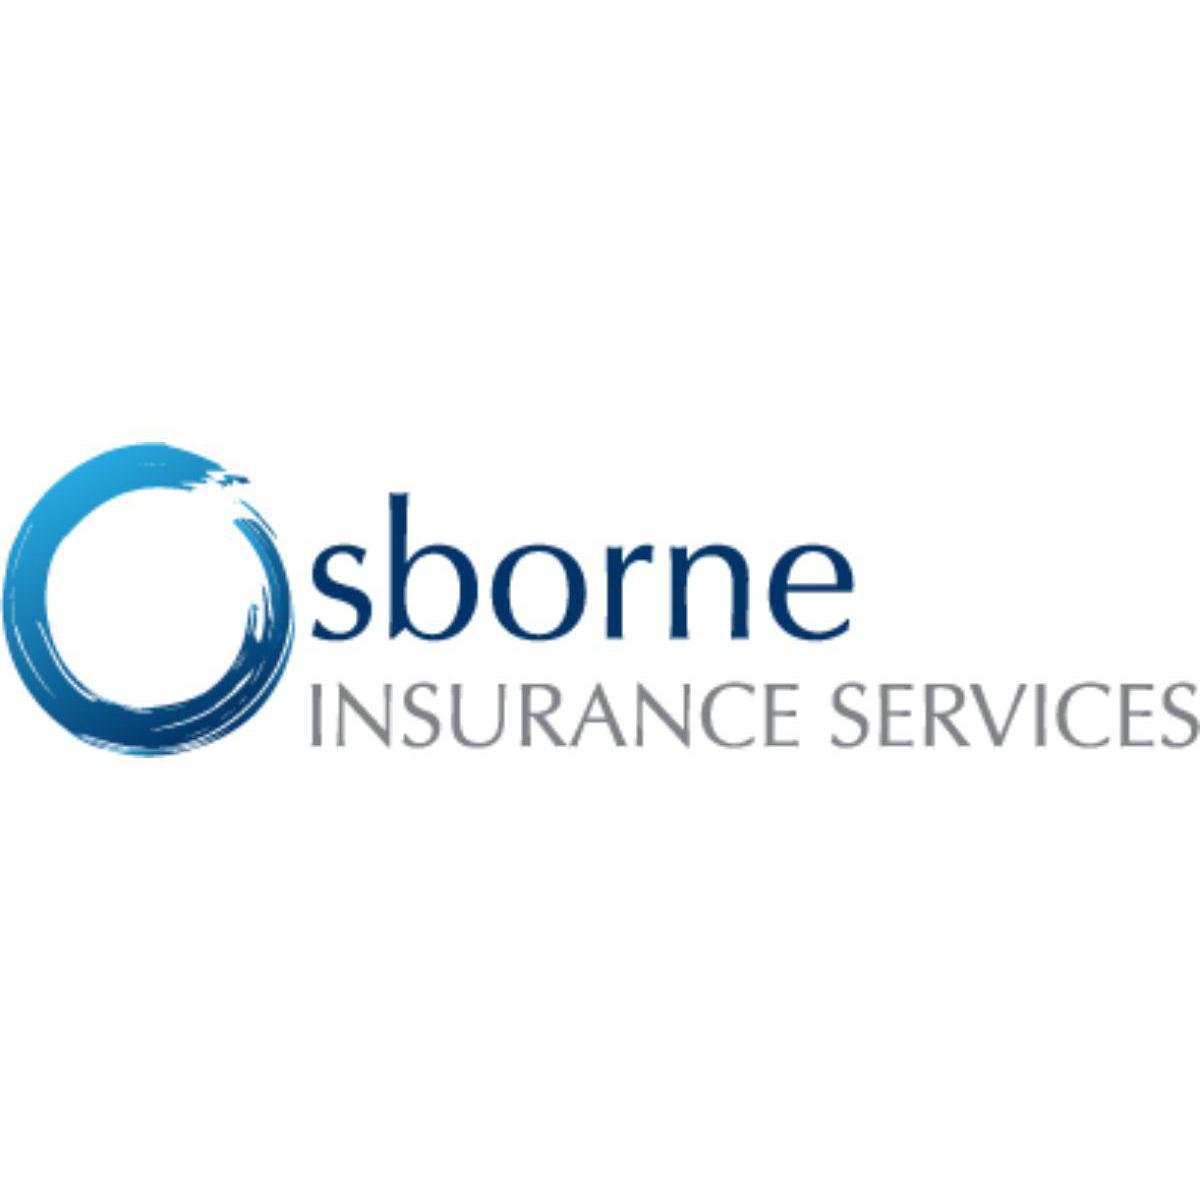 Osborne Insurance Services - Raleigh, NC 27609 - (919)845-9955 | ShowMeLocal.com